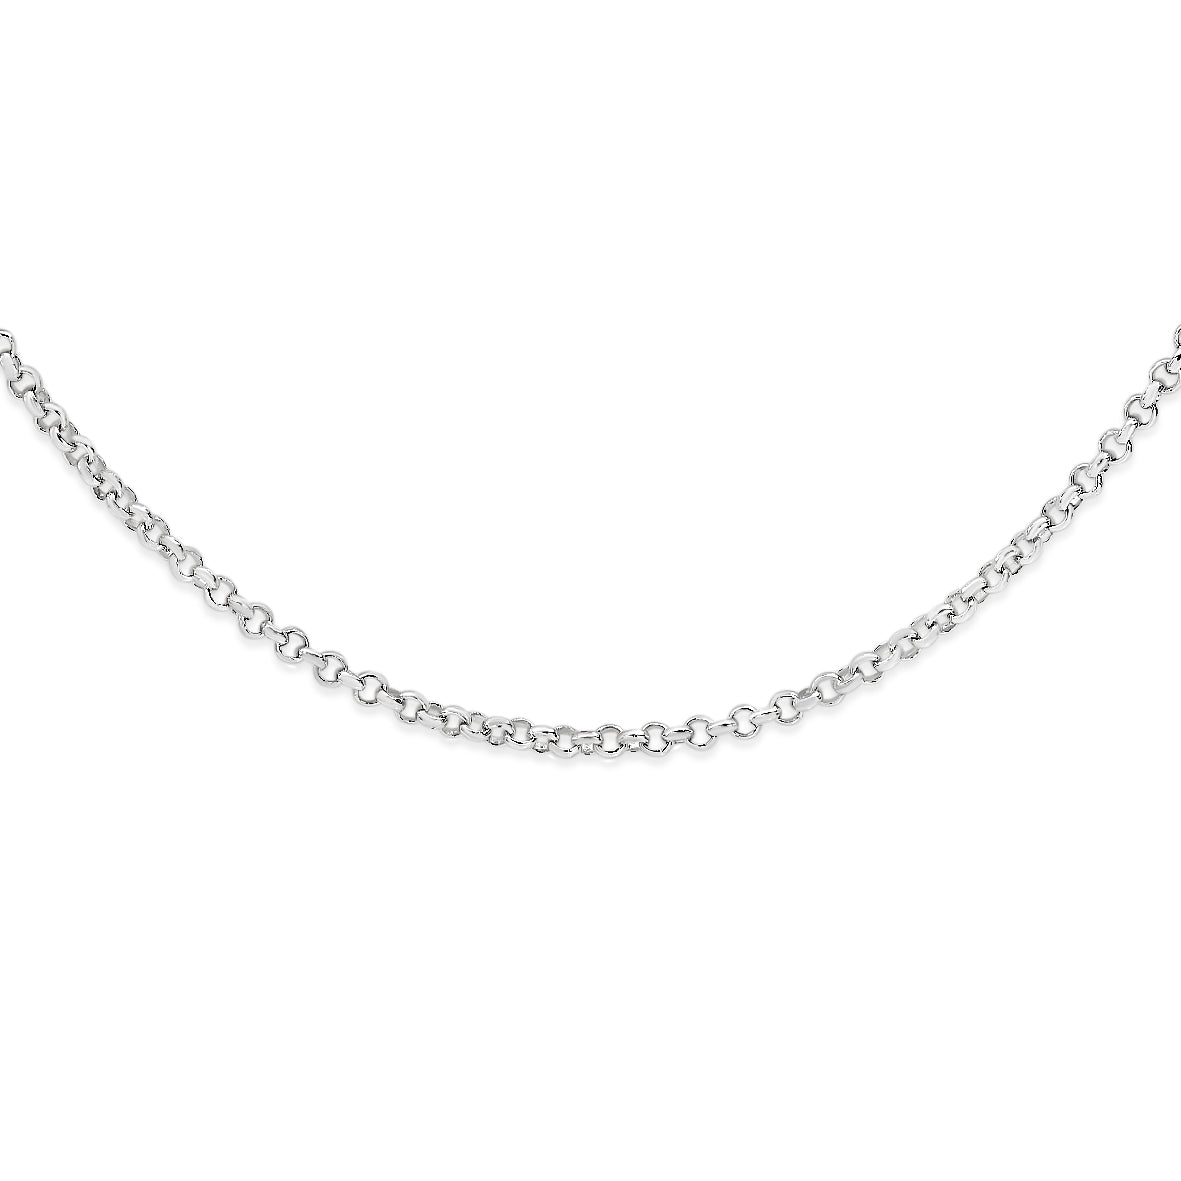 Sterling silver belcher link chain